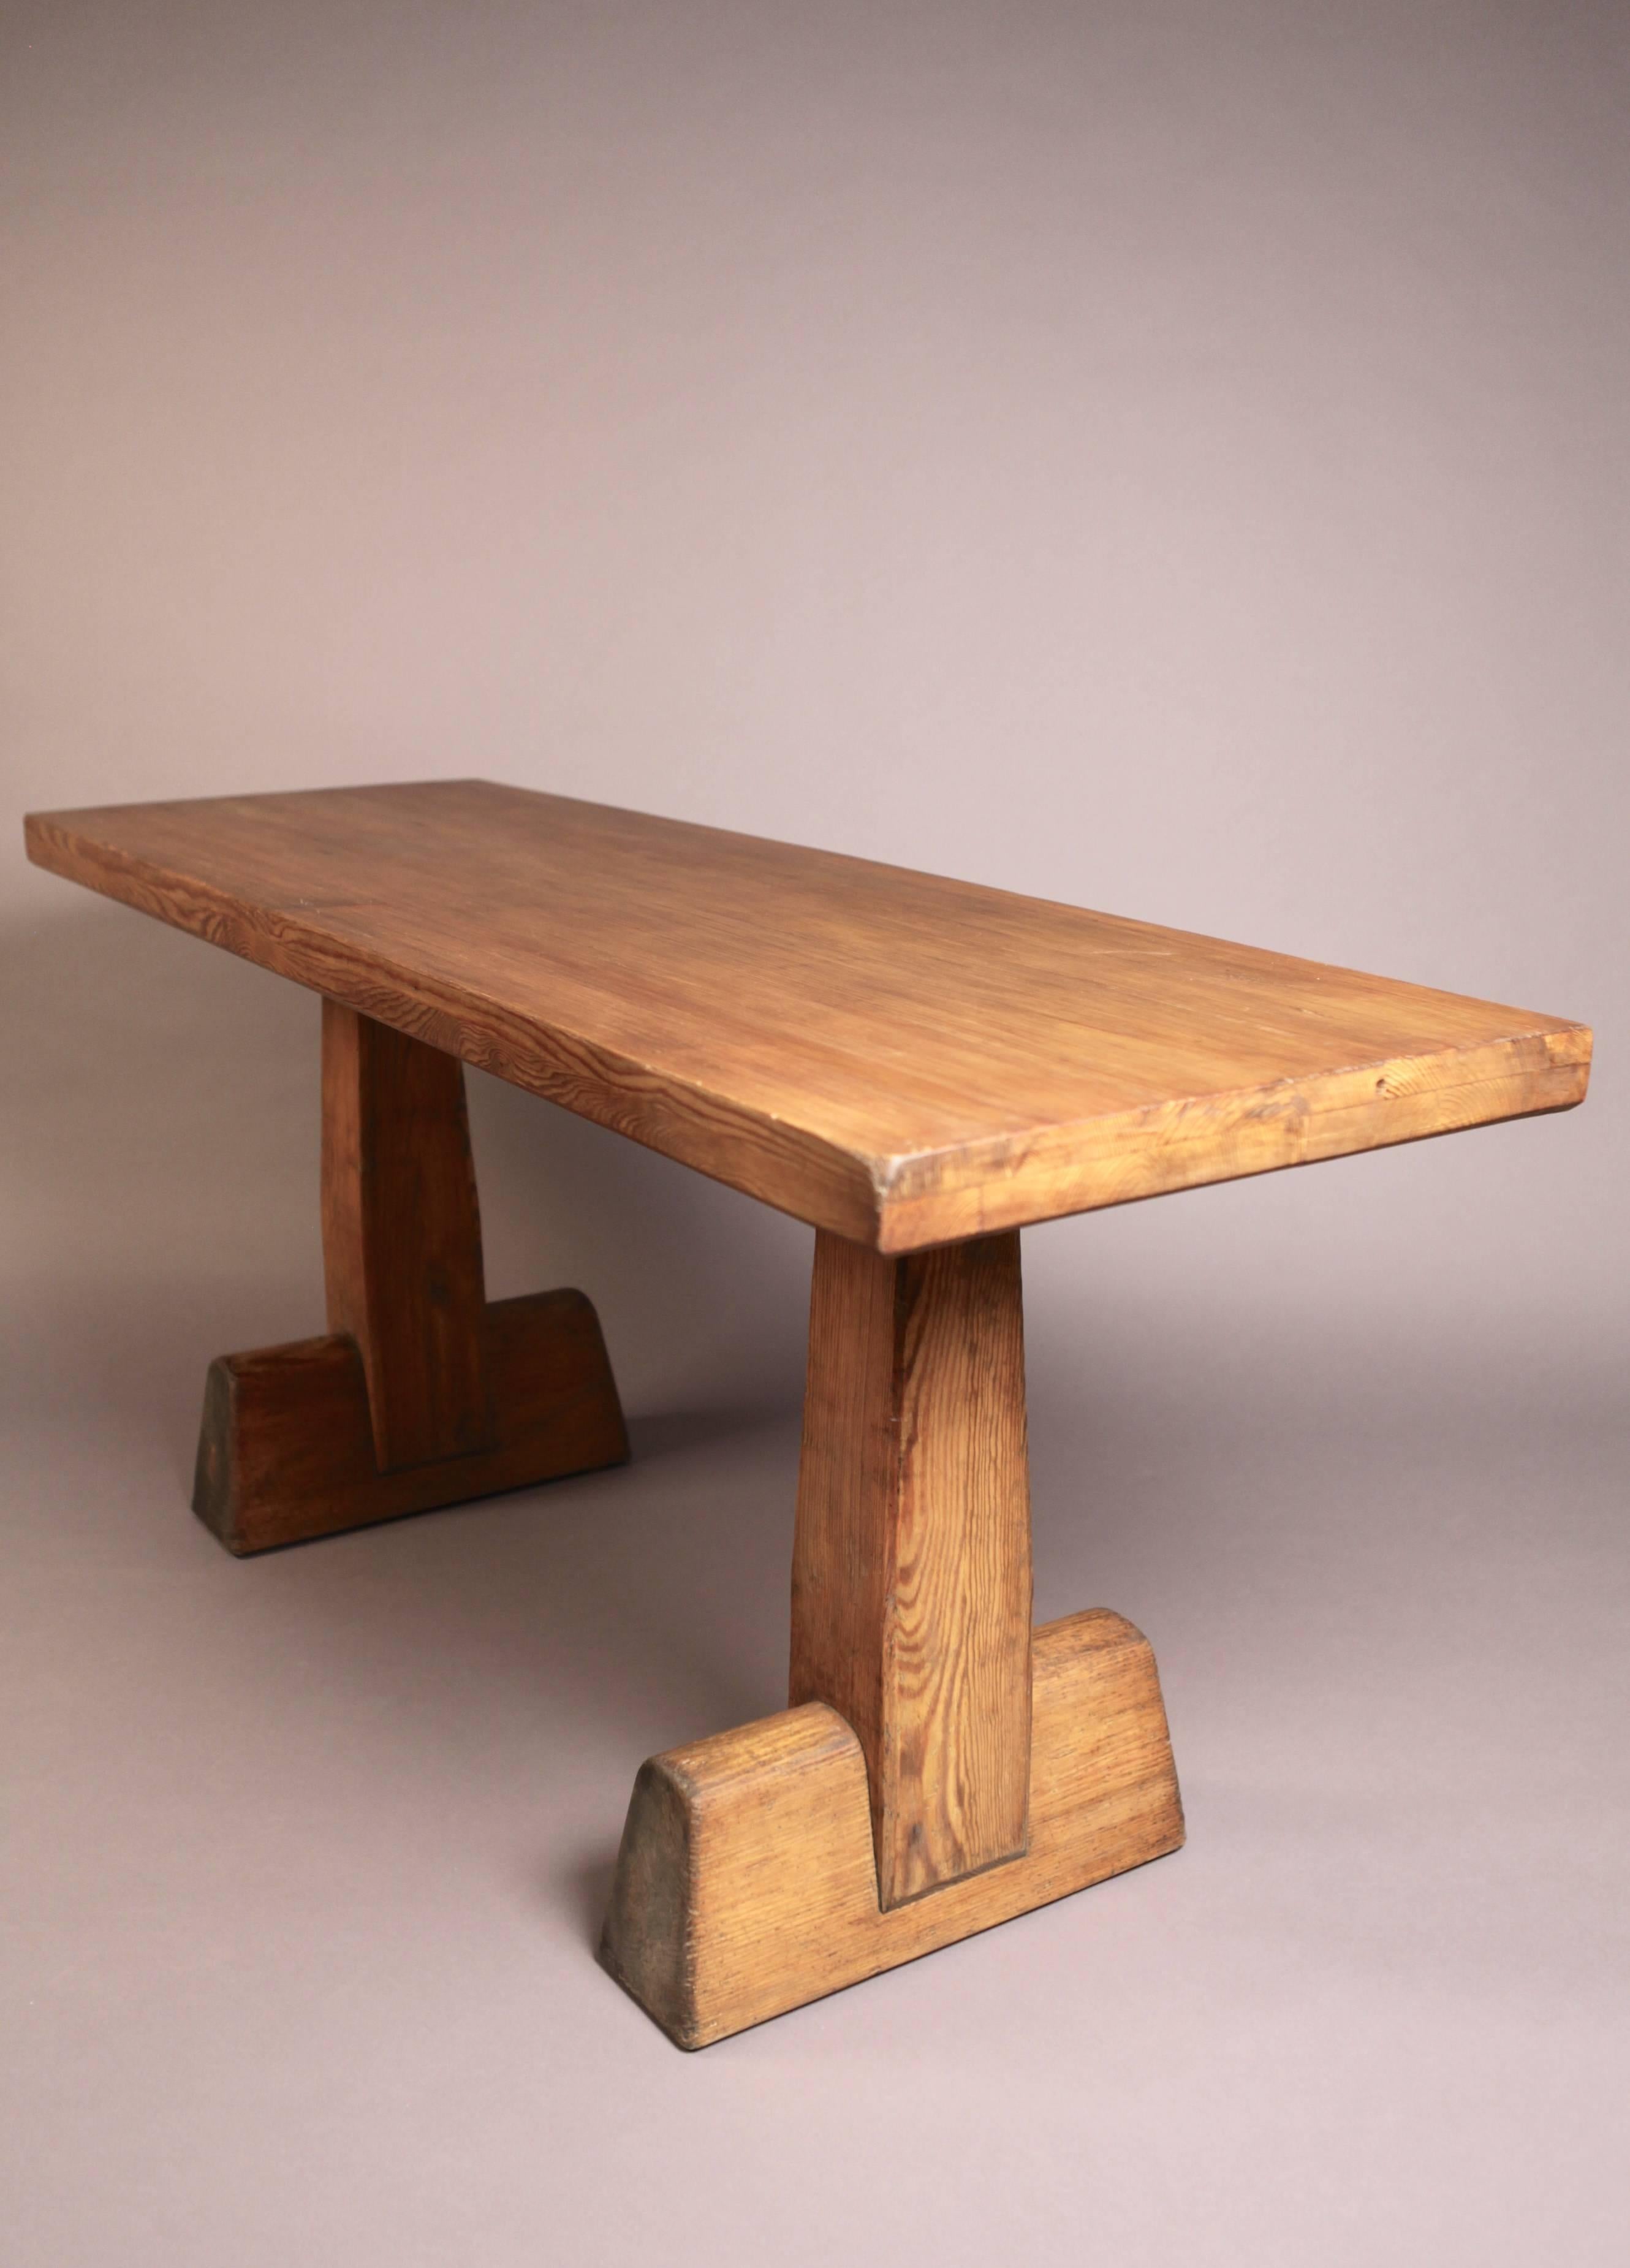 Utö library table designed by Axel Einar Hjorth.
Manufactured by Nordiska Kompaniet, Sweden, 1930s.